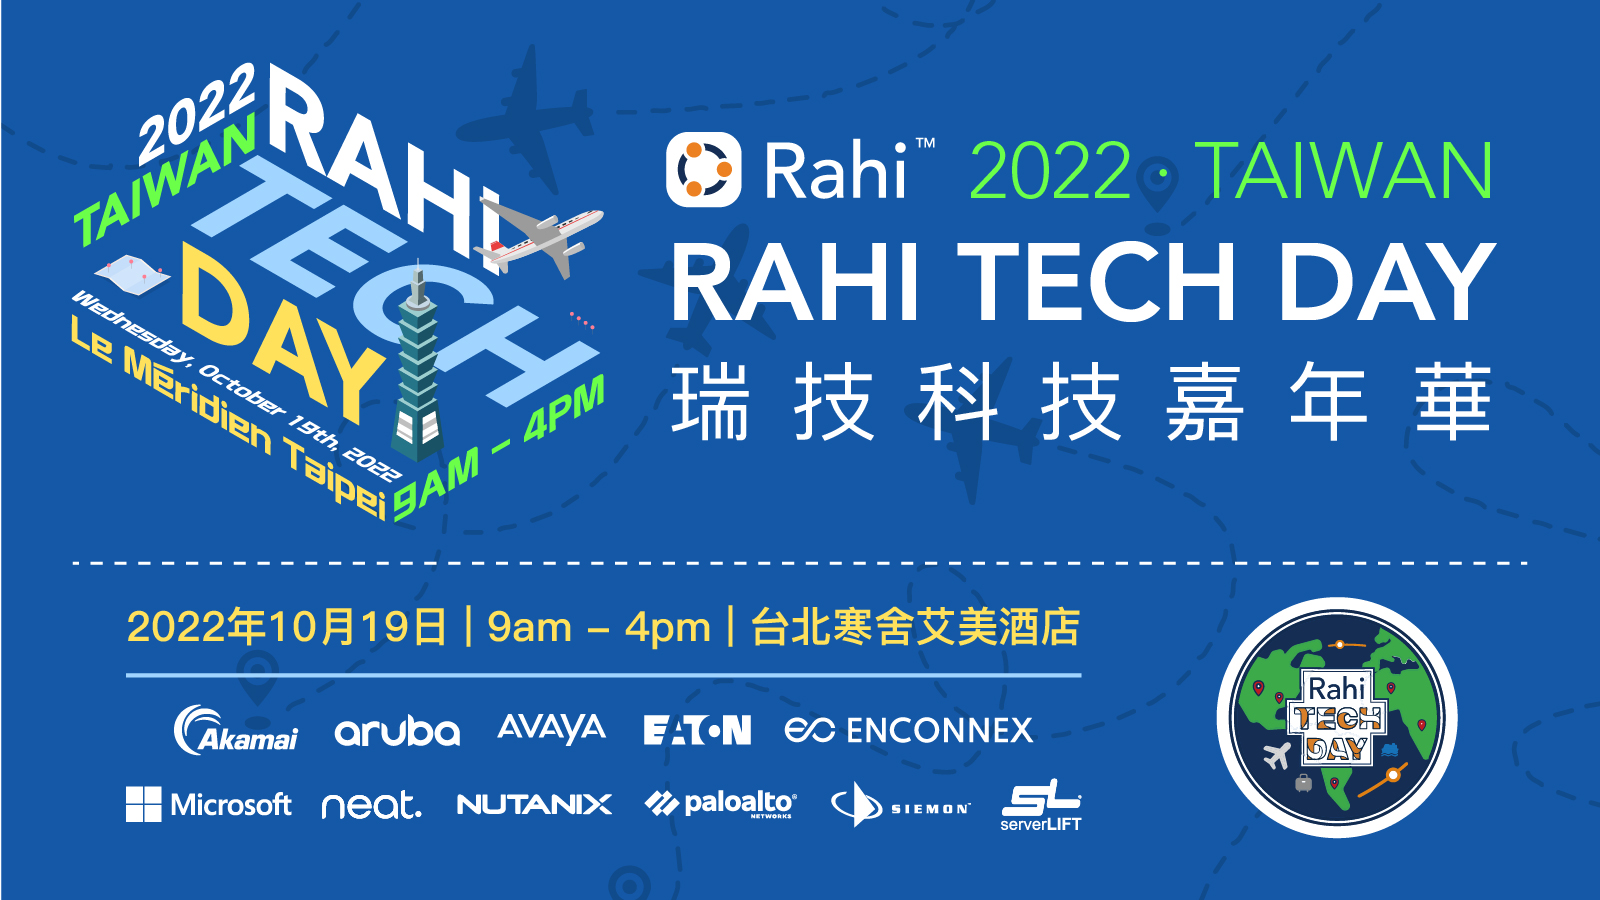 2022 rahi tech day 瑞技科技日